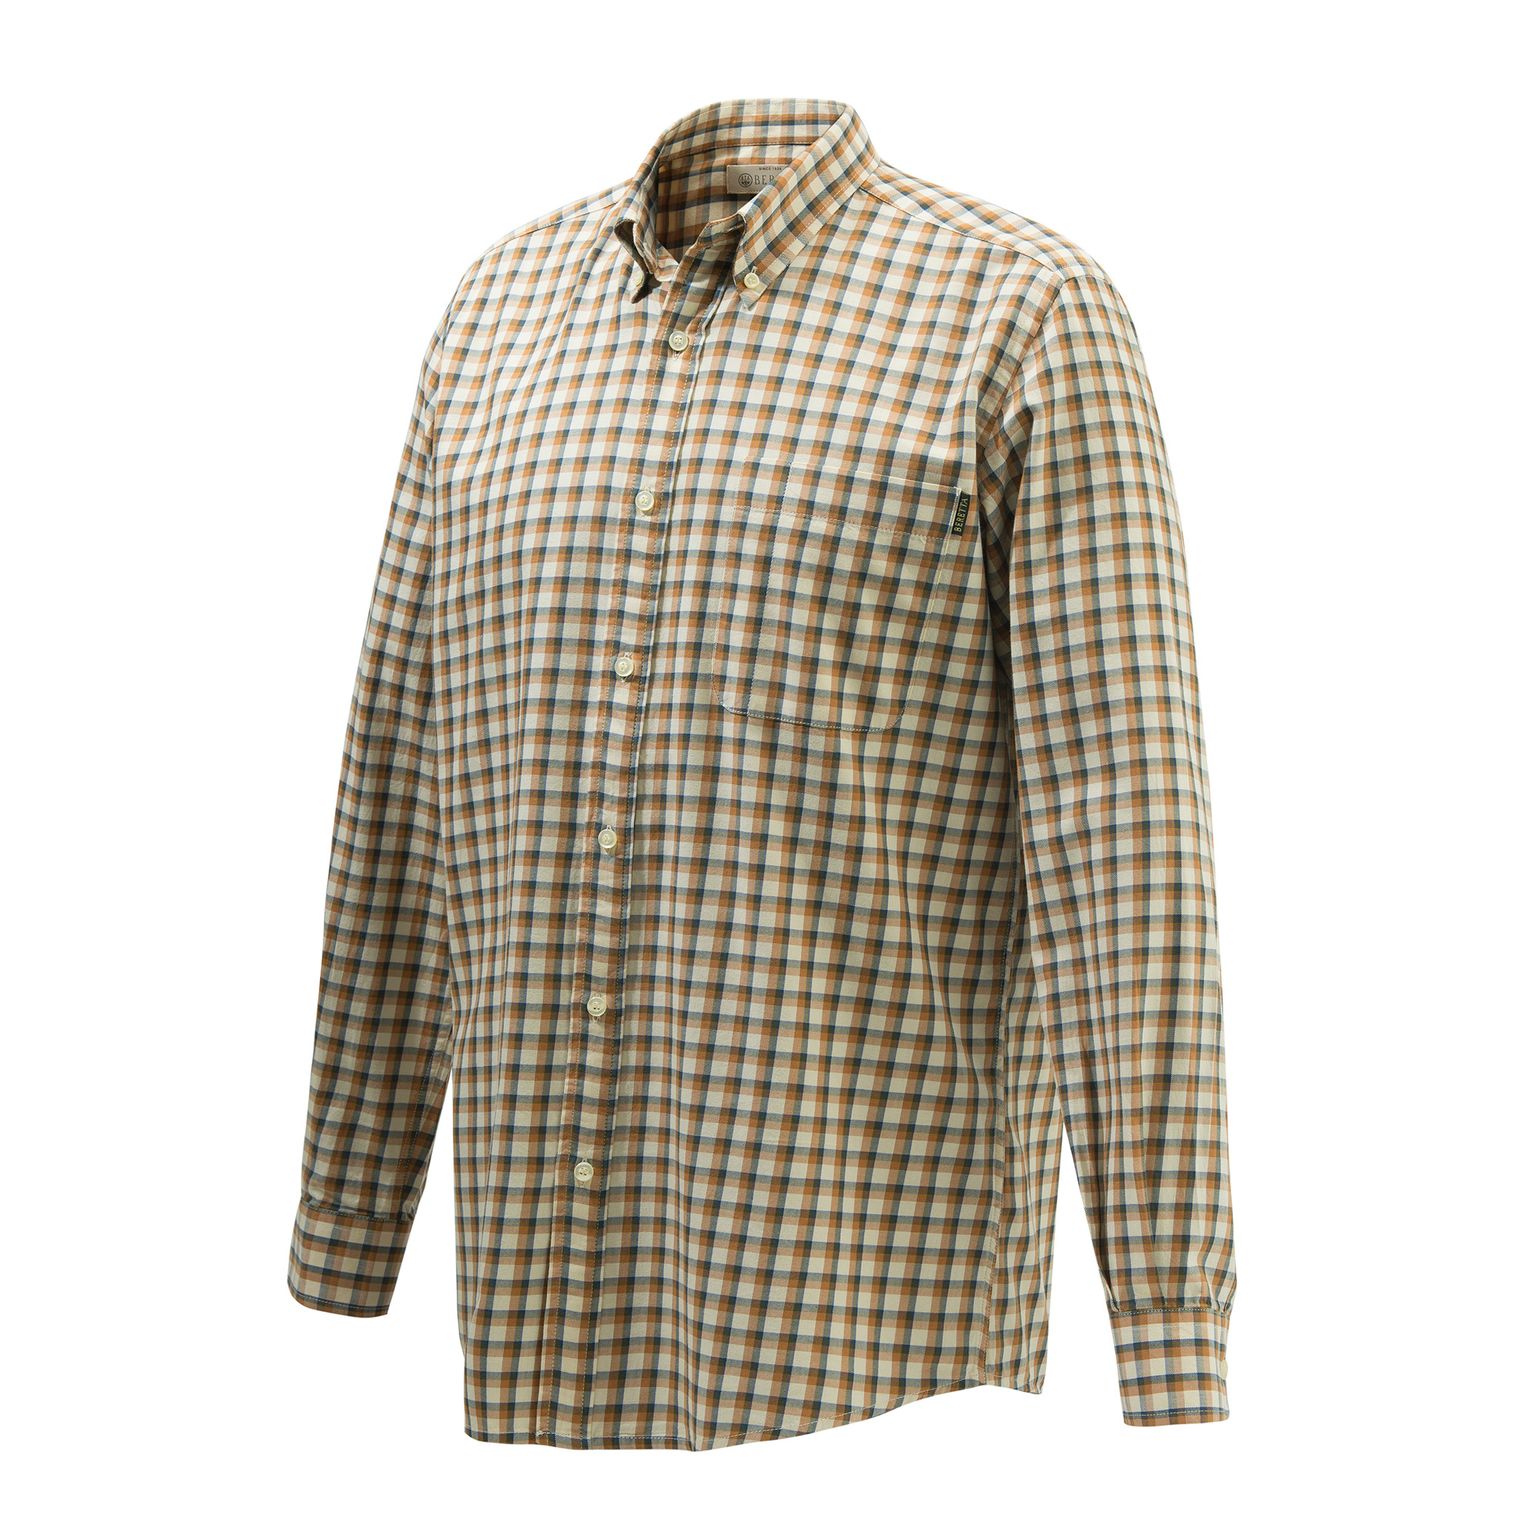 Men's Wood Button Down Shirt Beige & Rust Check